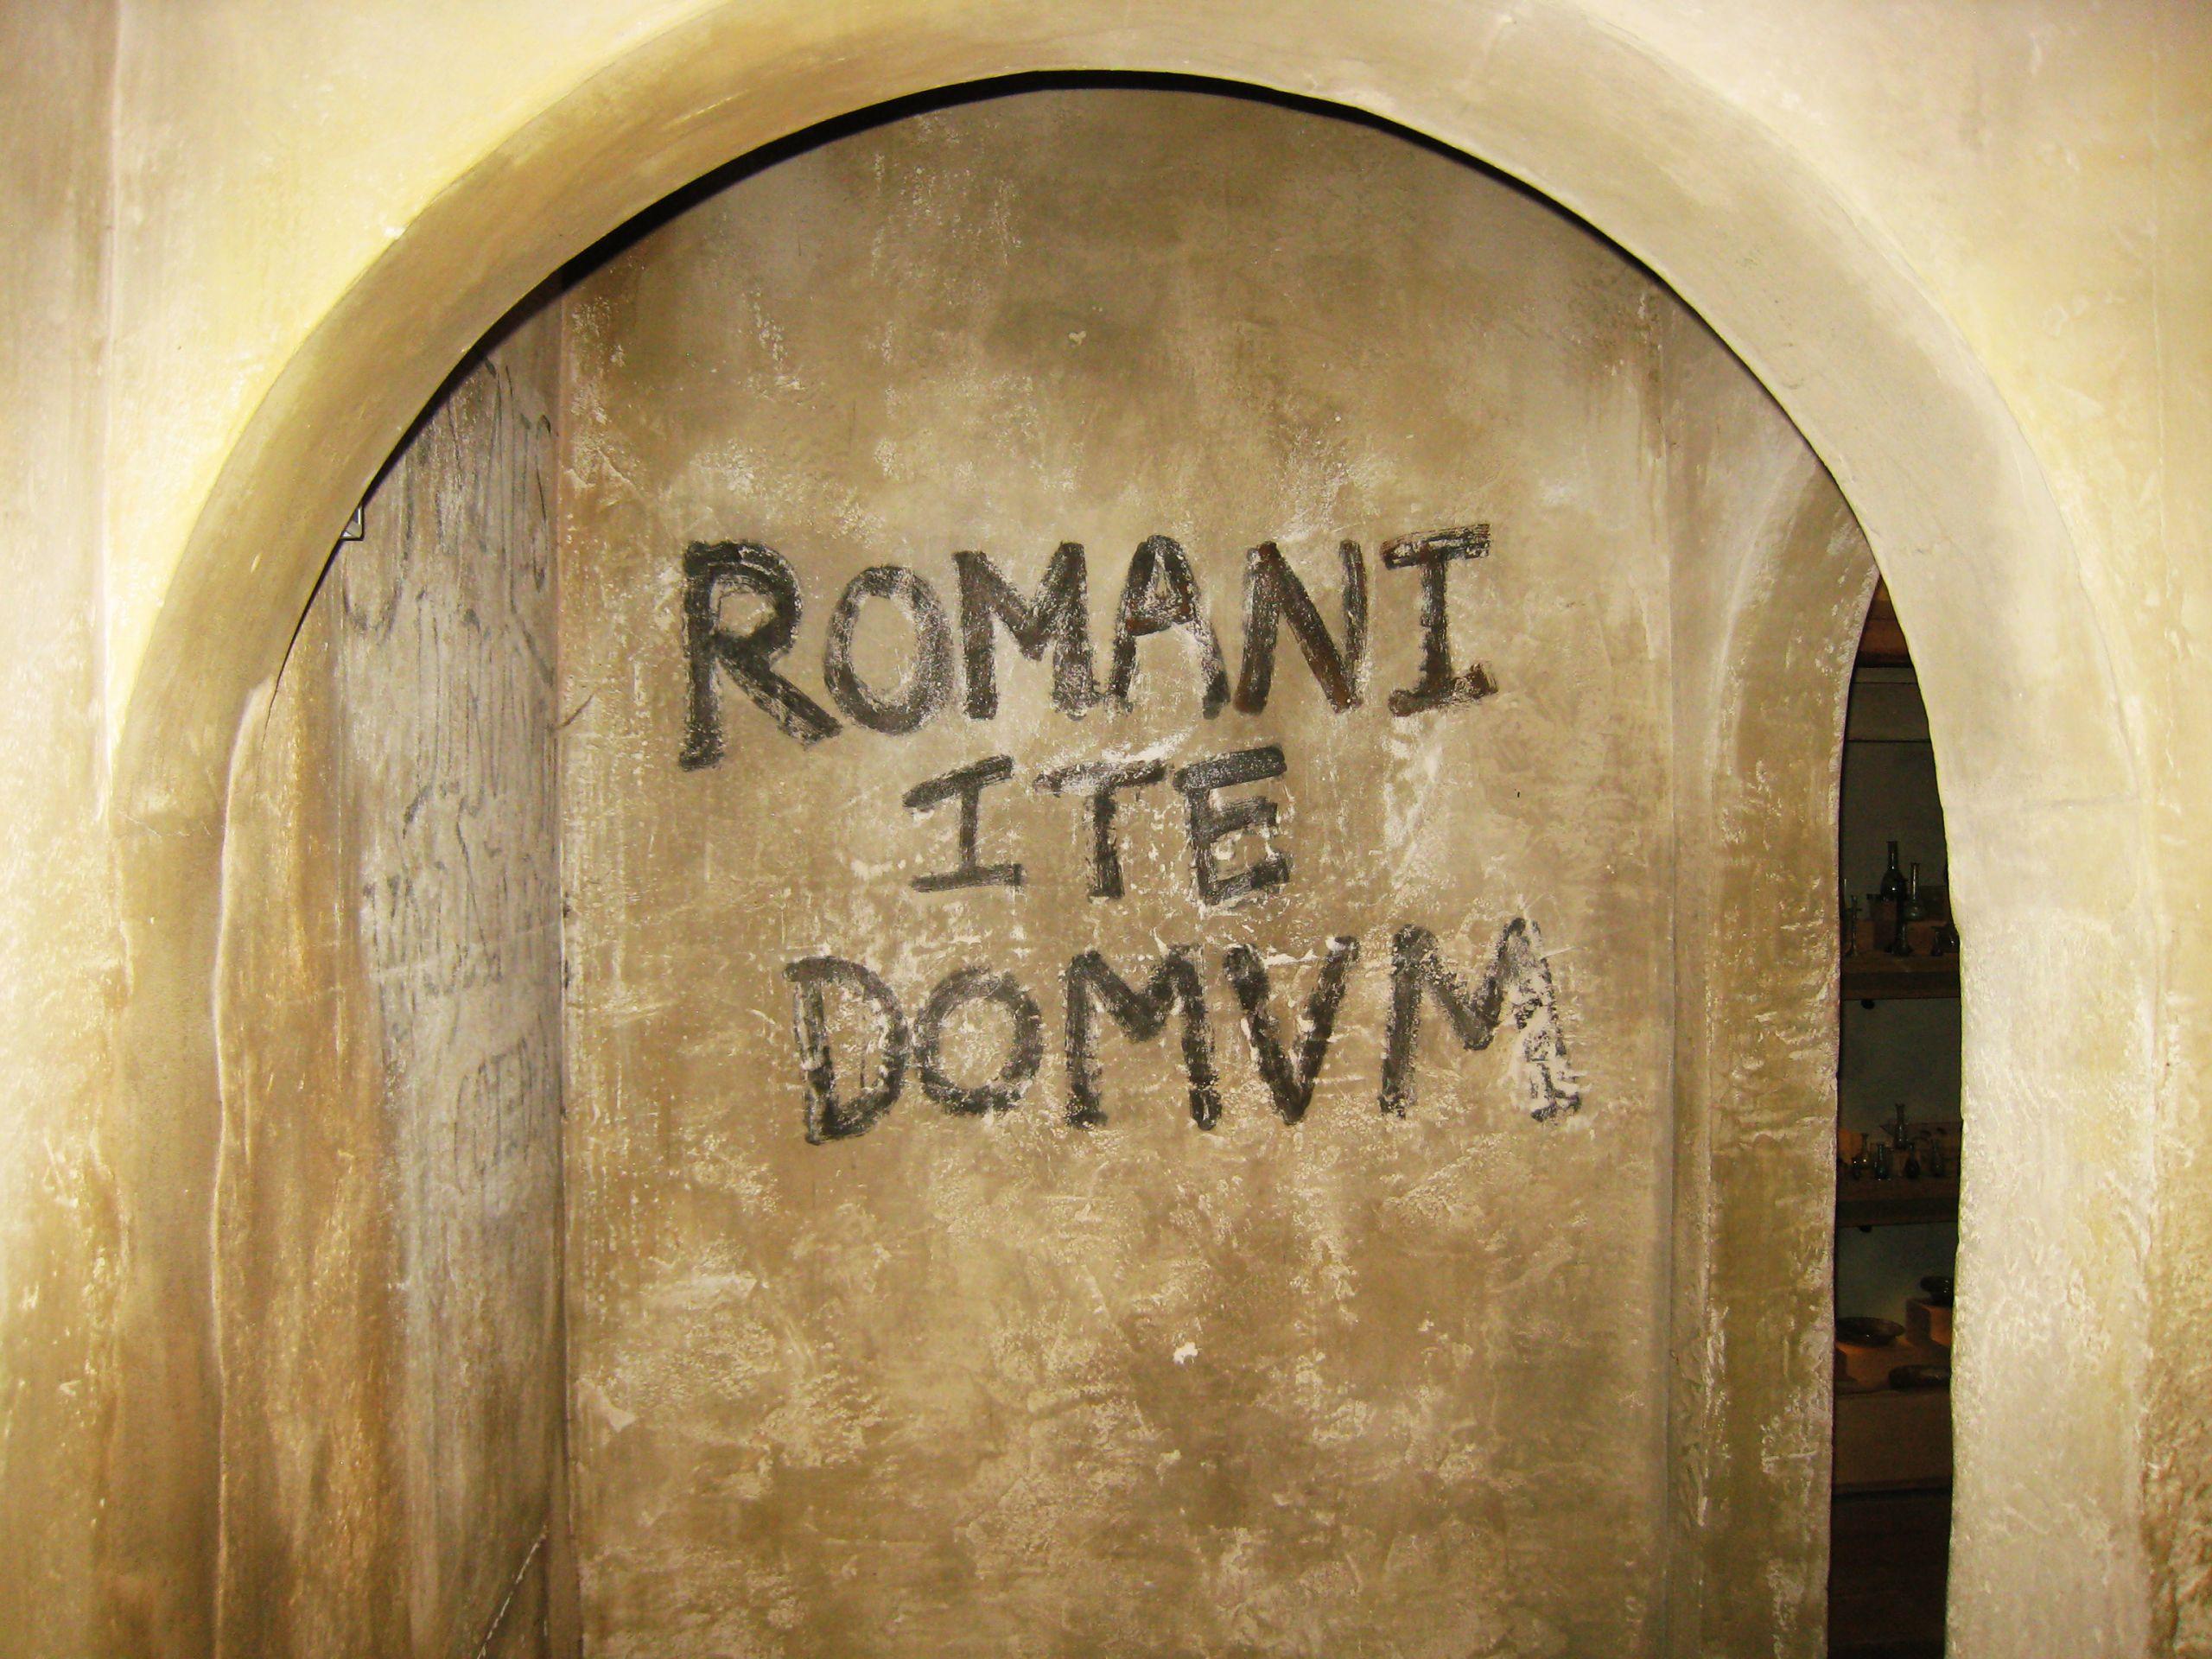 Romani ite domum, via wikimedia commons